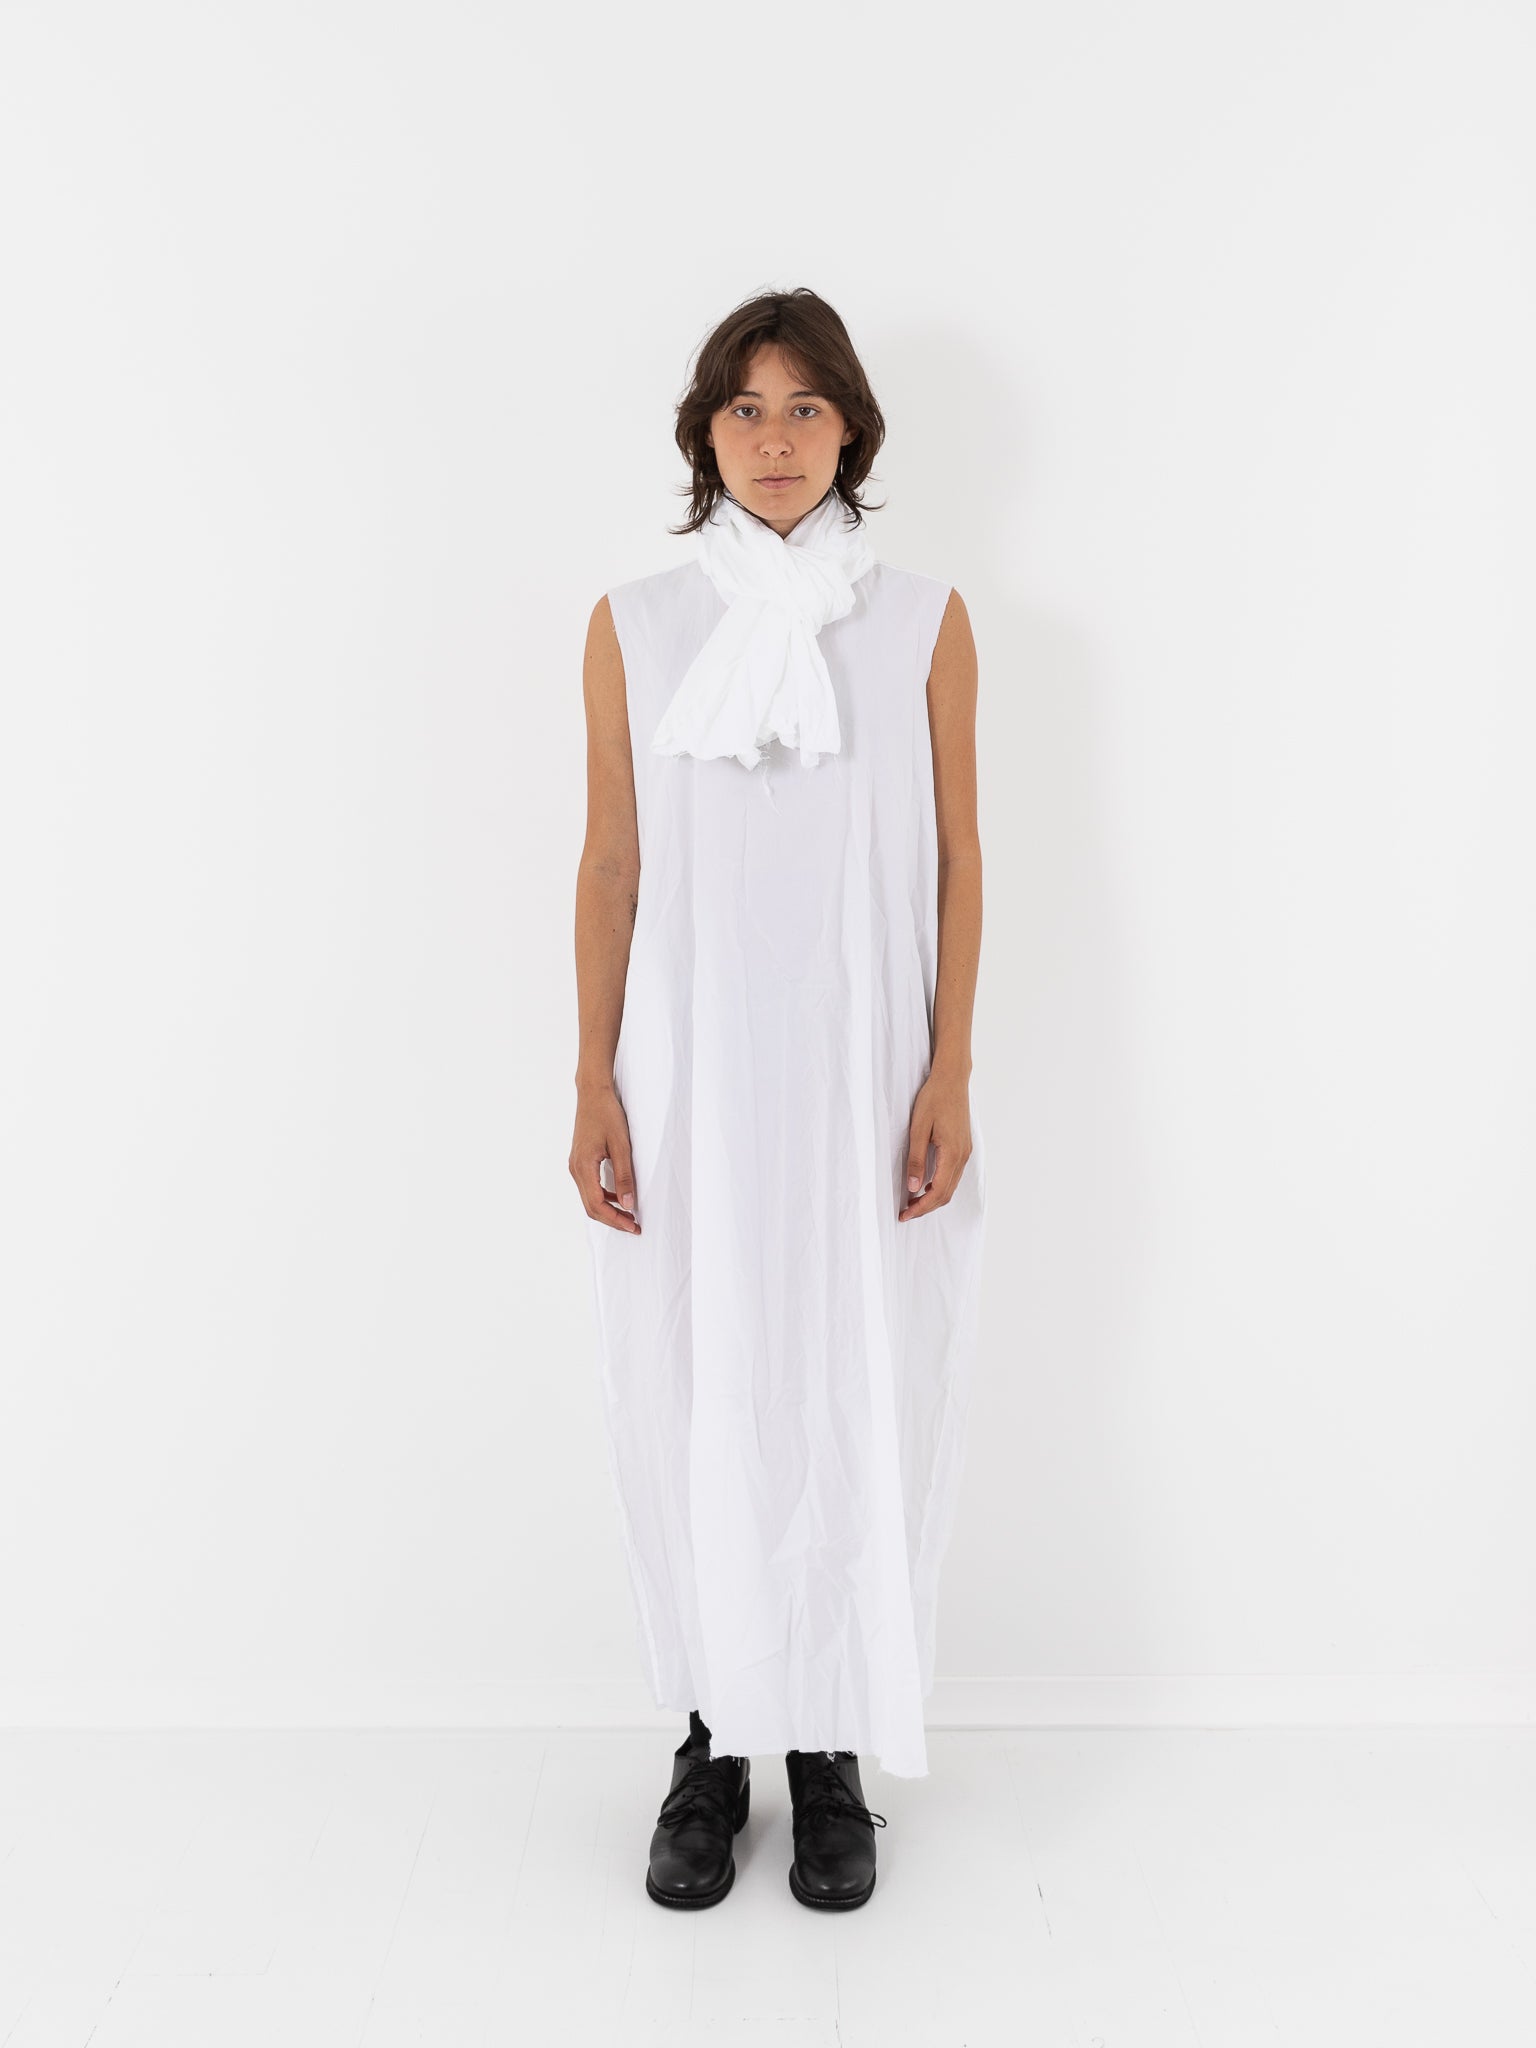 SCHA Sleeveless Dress, White - Worthwhile, Inc.